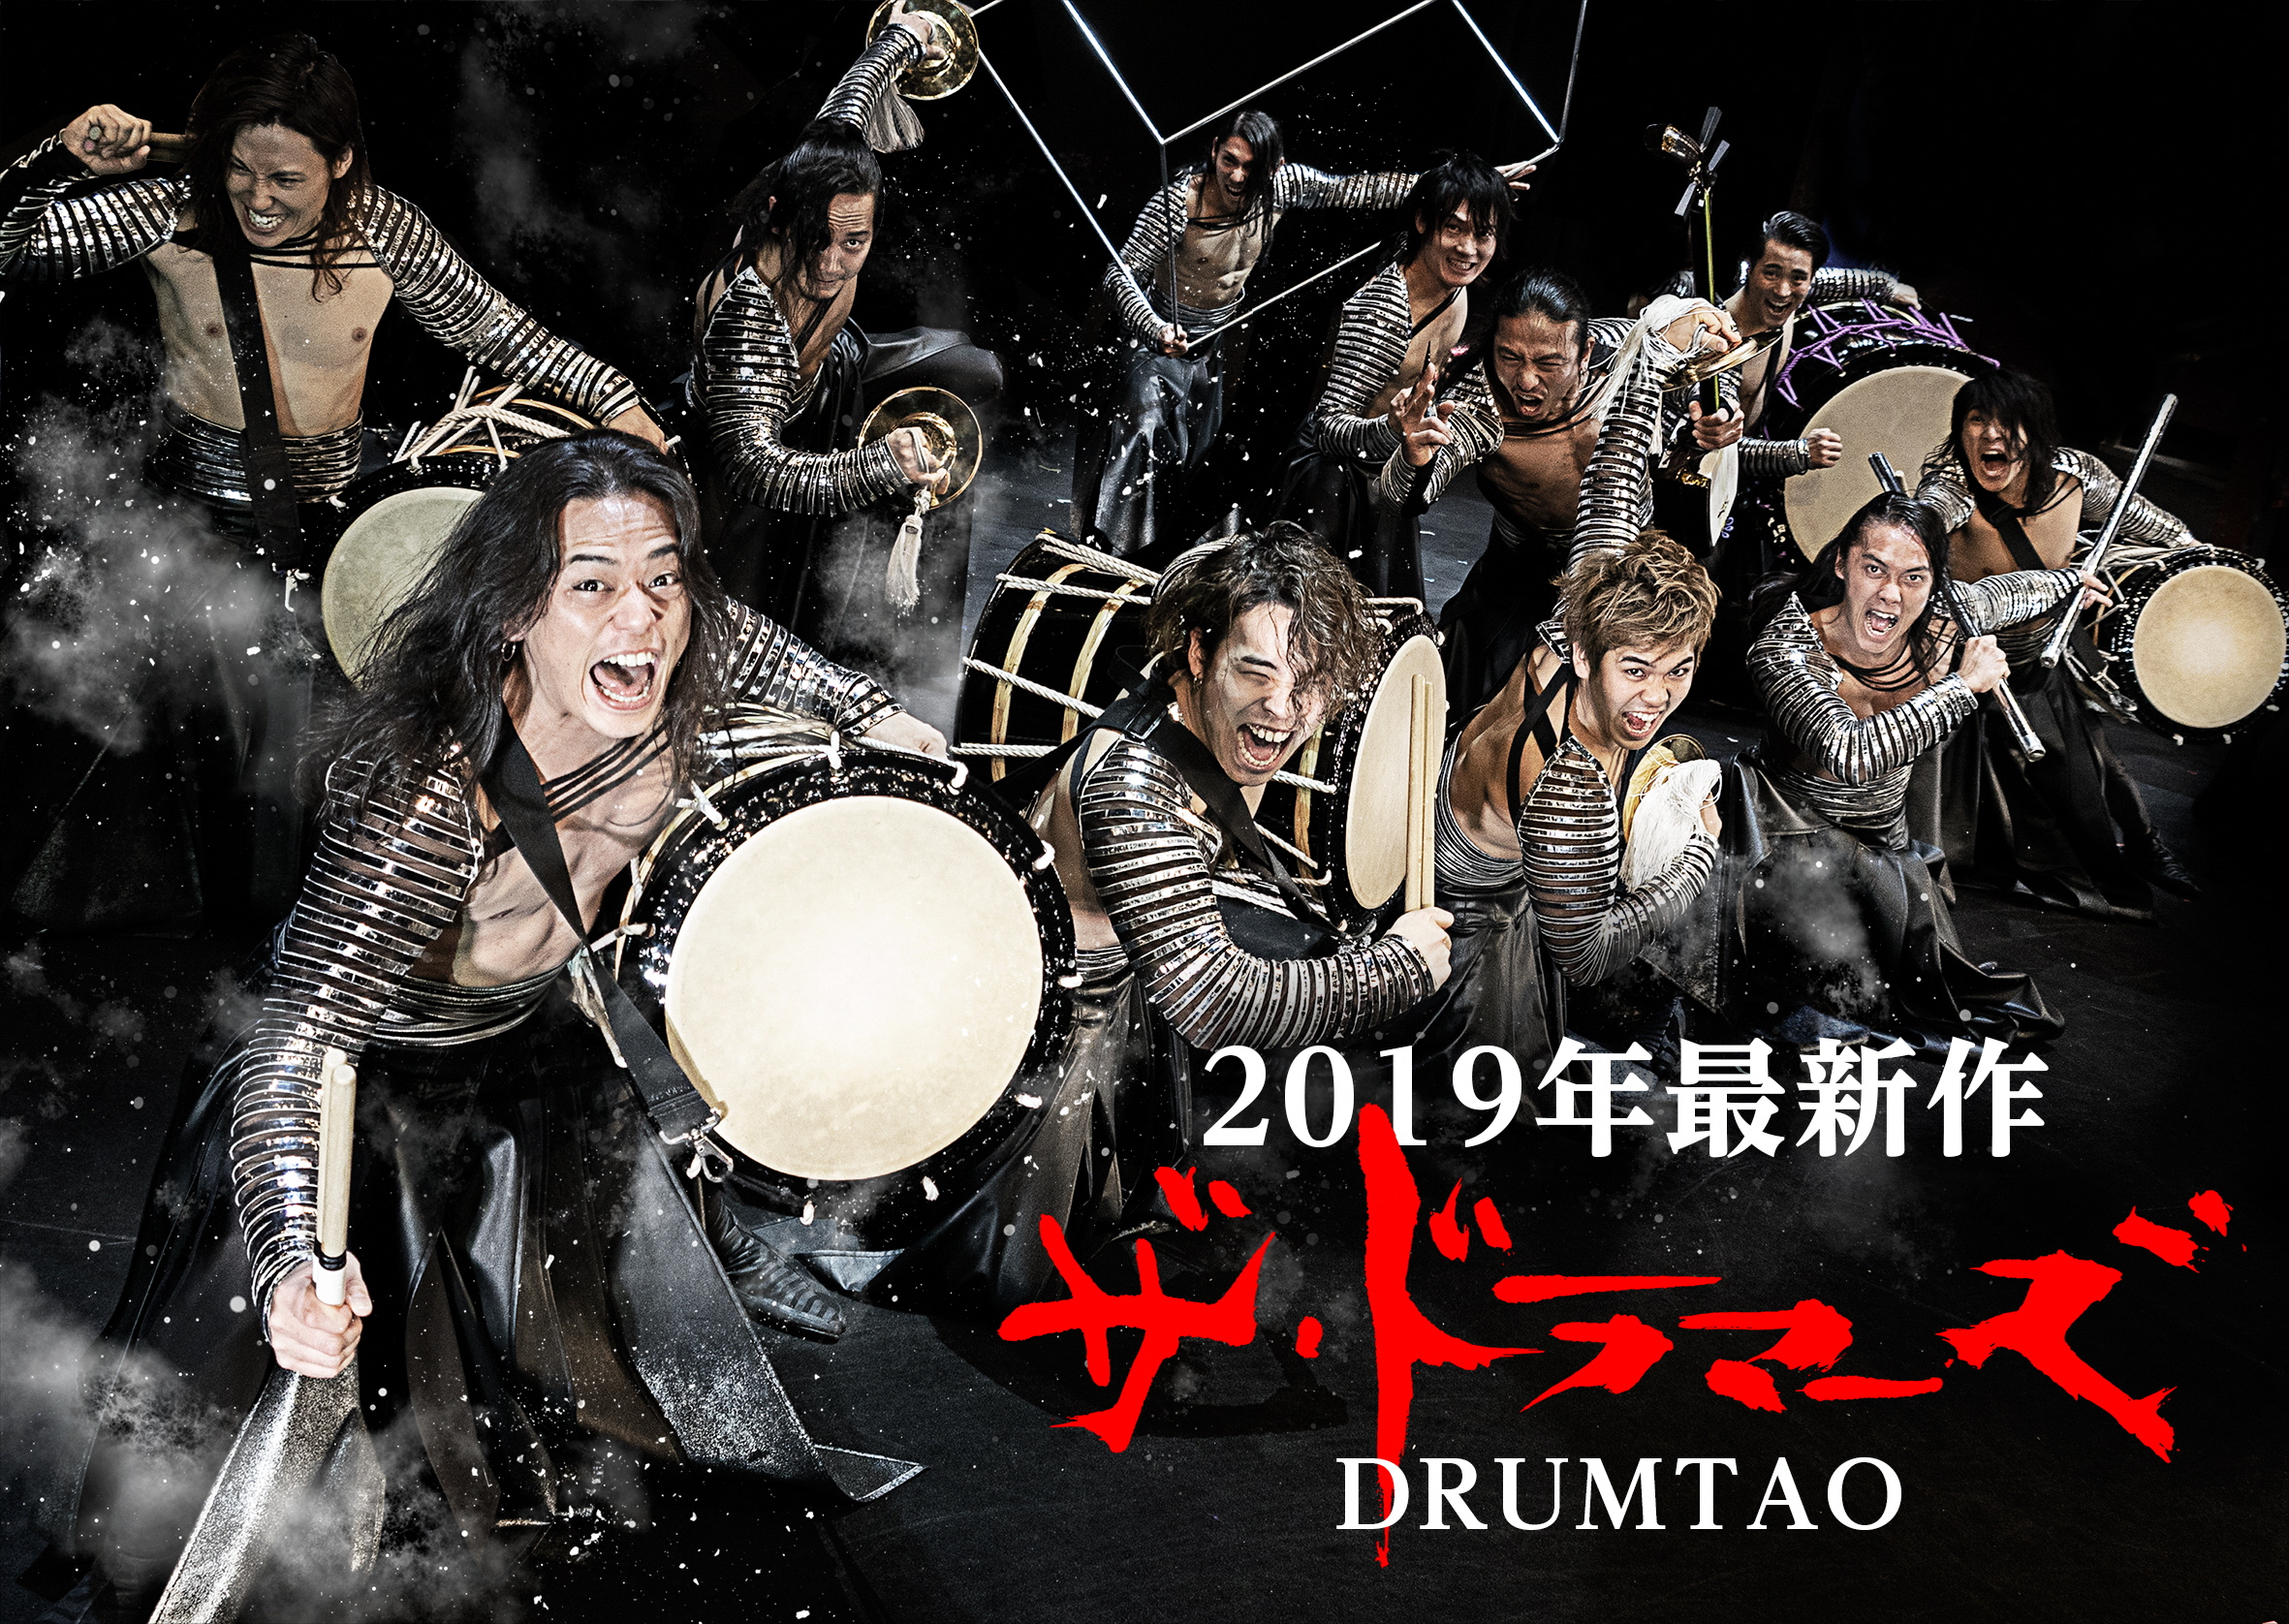 DRUM TAO2019年新作舞台「ザ・ドラマーズ」